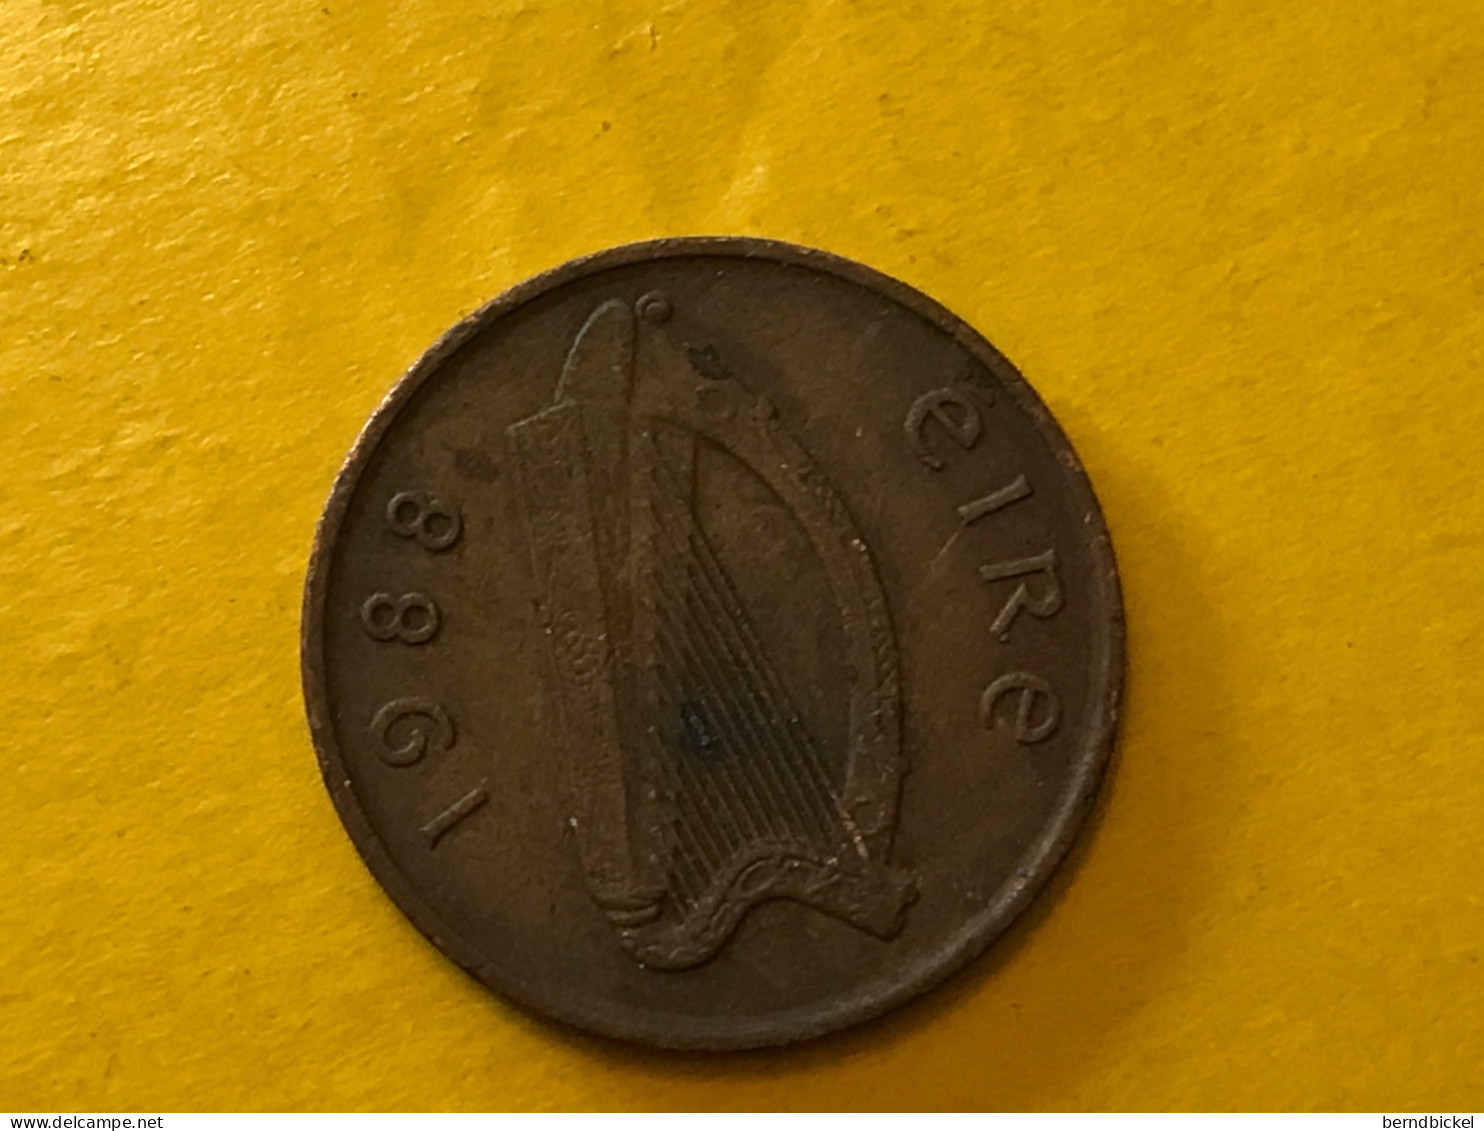 Münze Münzen Umlaufmünze Irland 1 Penny 1988 - Ireland